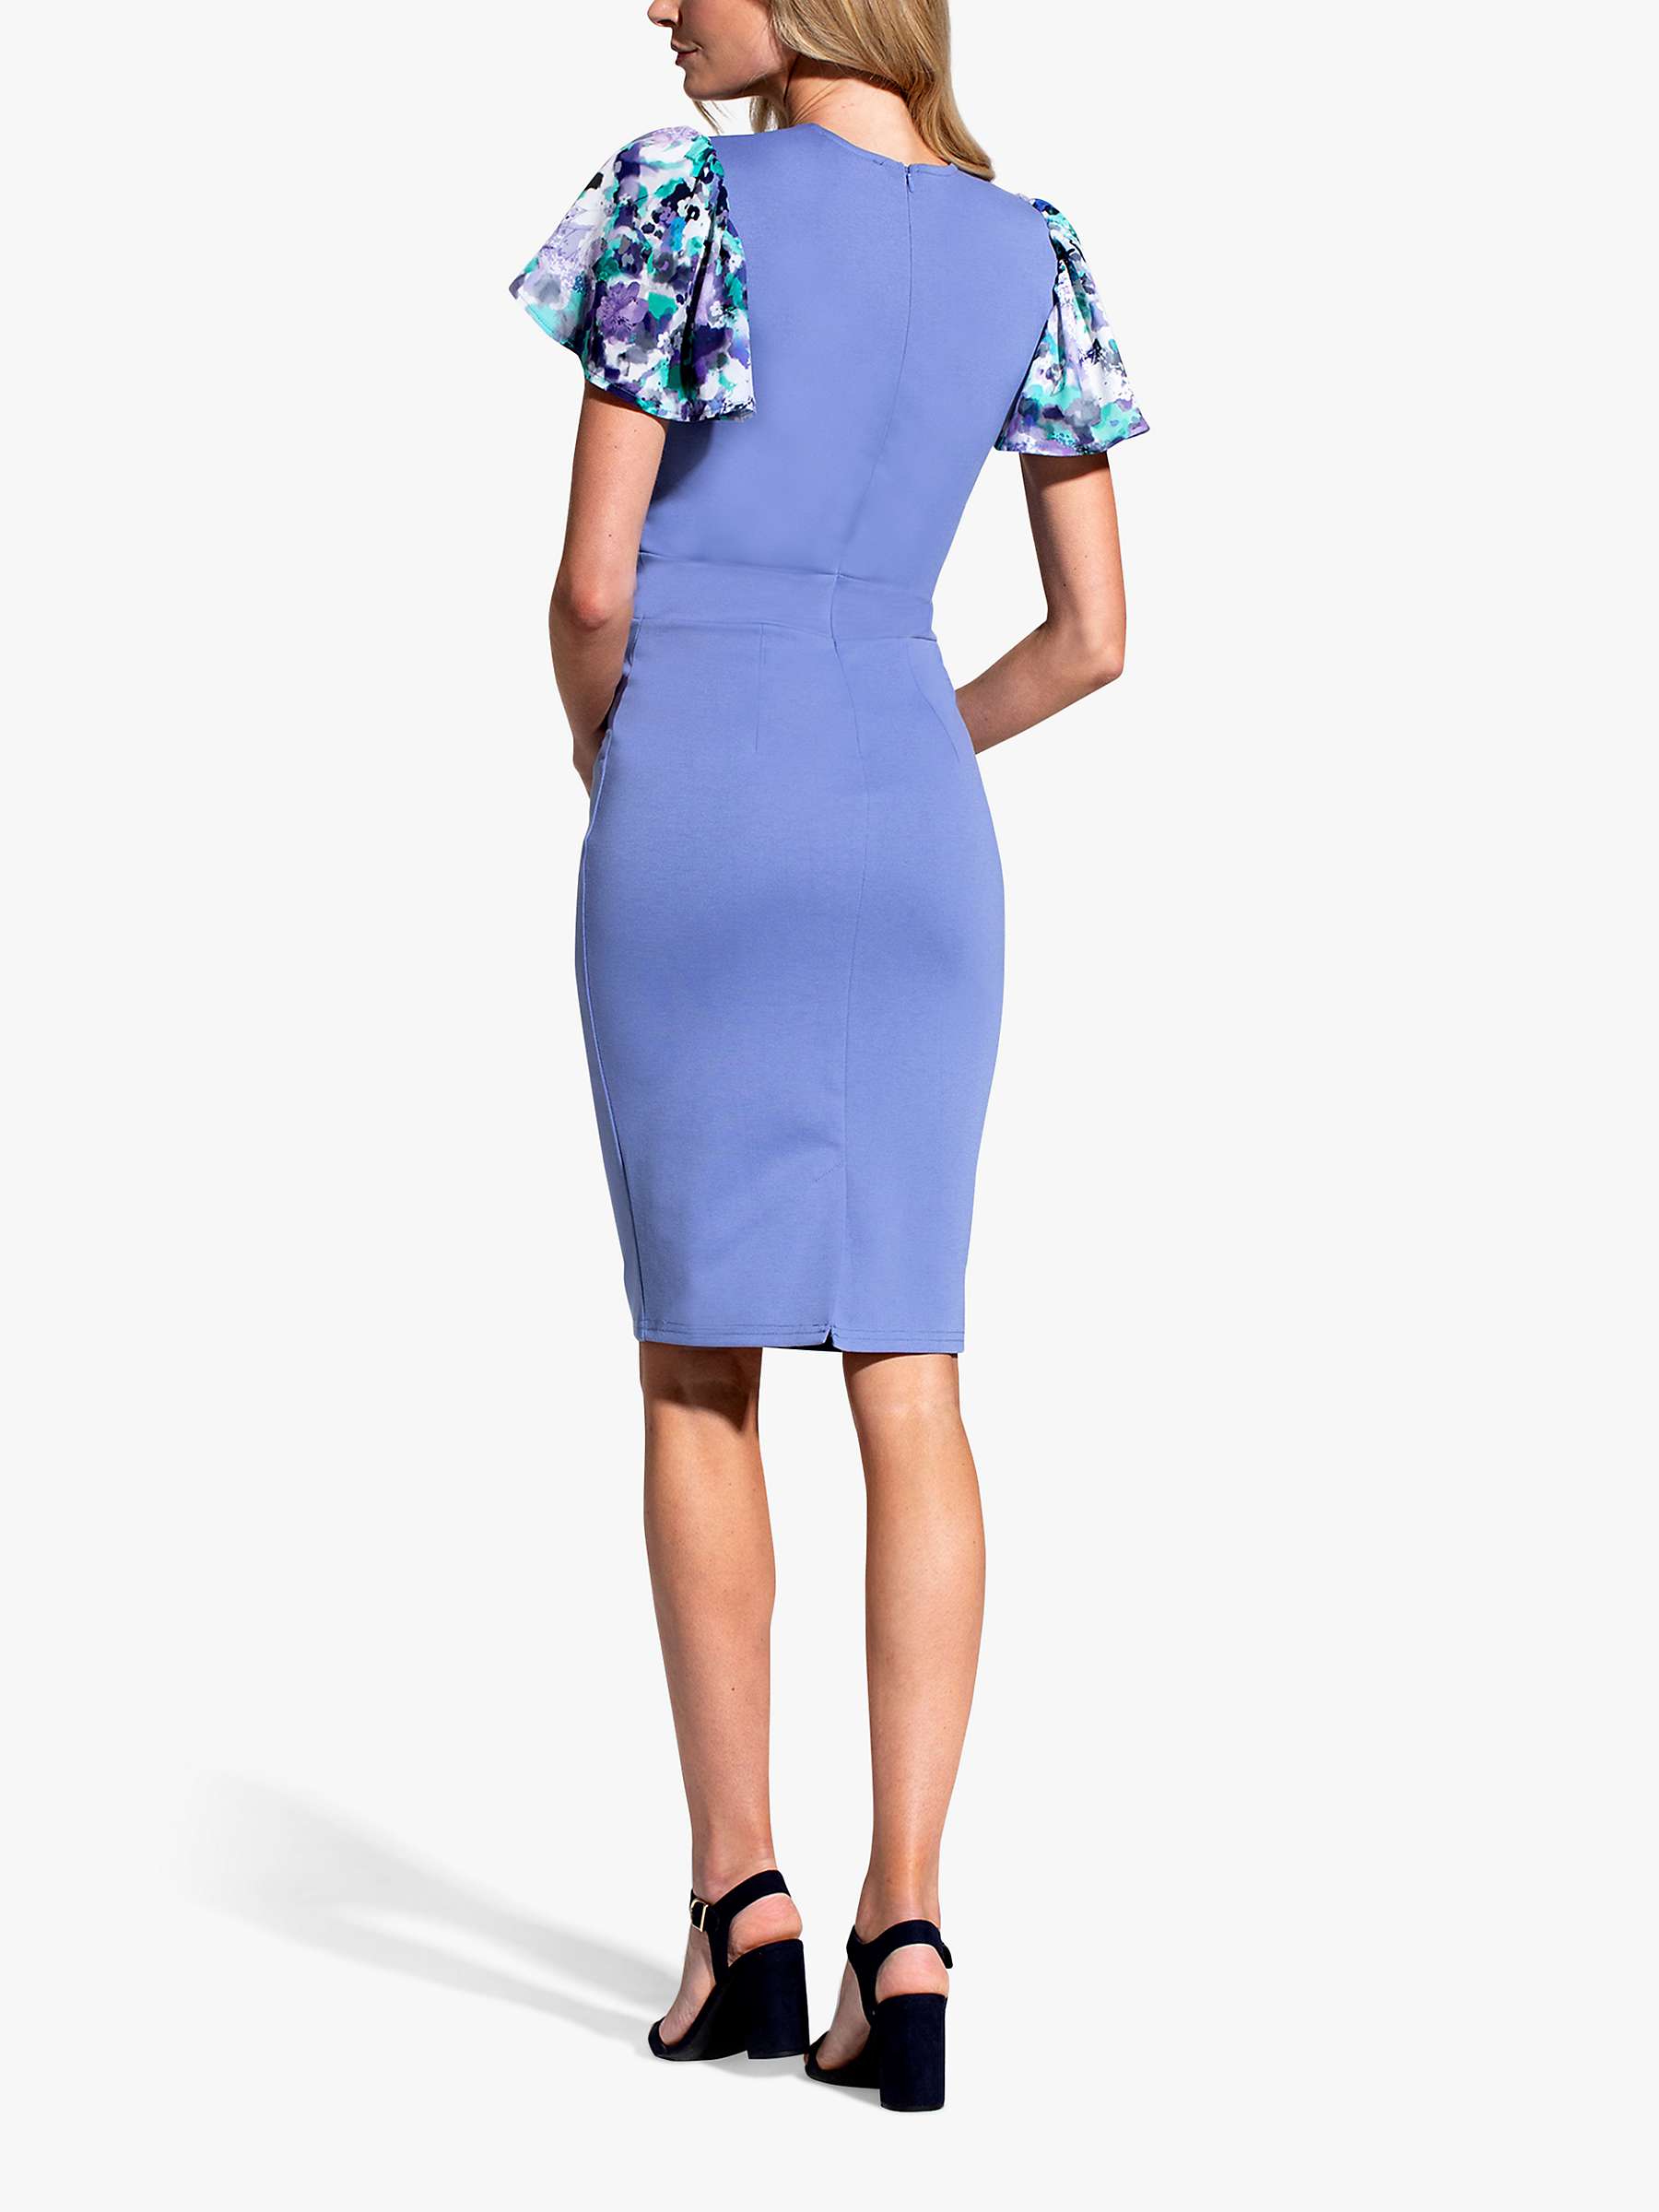 Buy HotSquash Ponte Jersey Floral Knee Length Dress, Wildblue/Navy Online at johnlewis.com